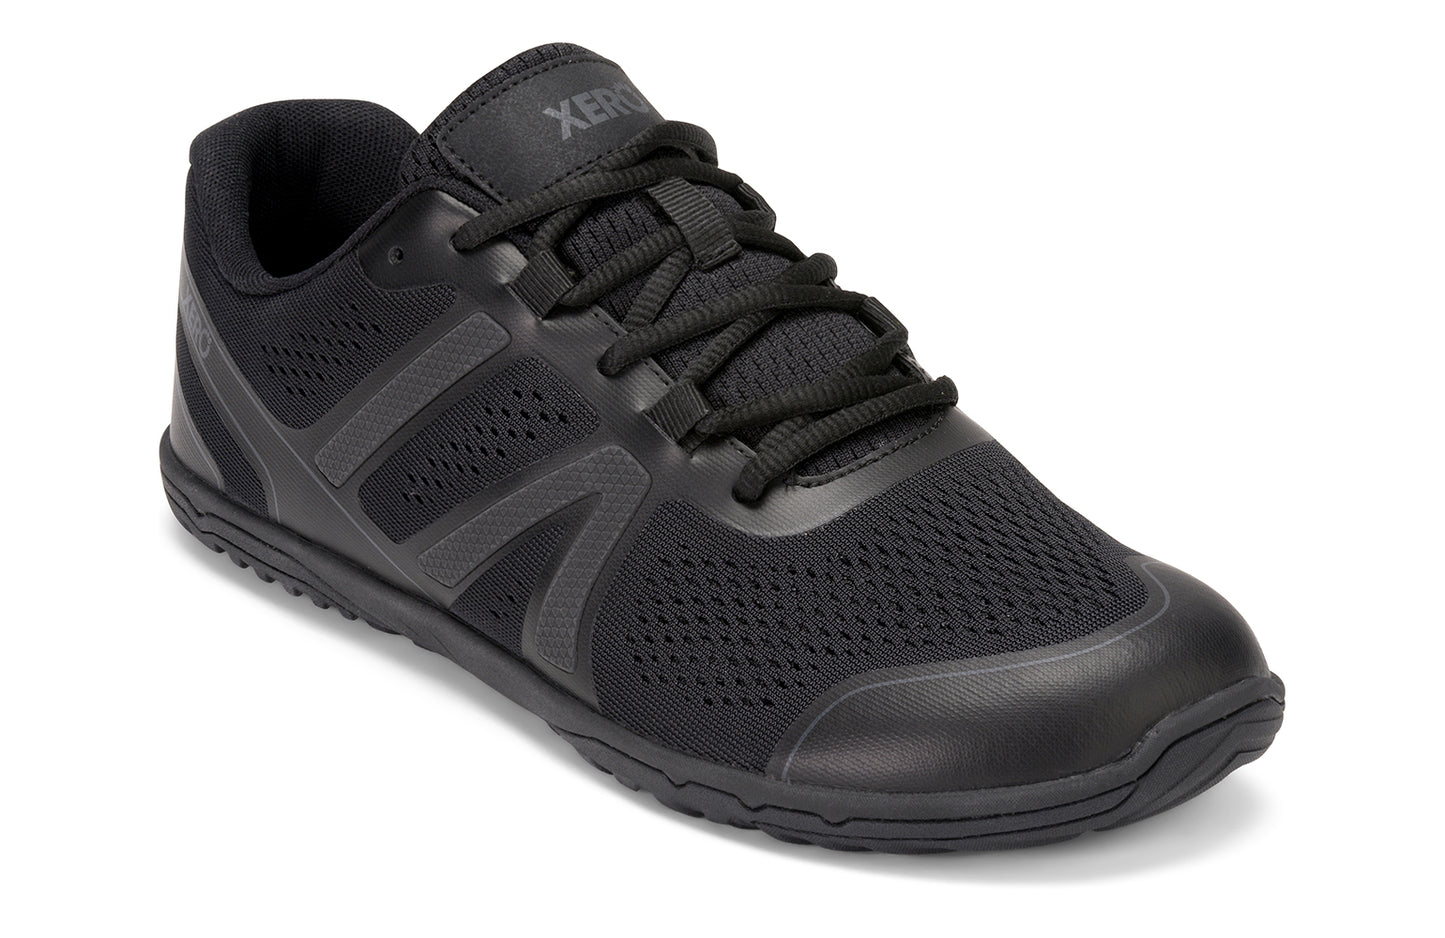 Xero Shoes - HFS II - Black/Asphalt - Men's